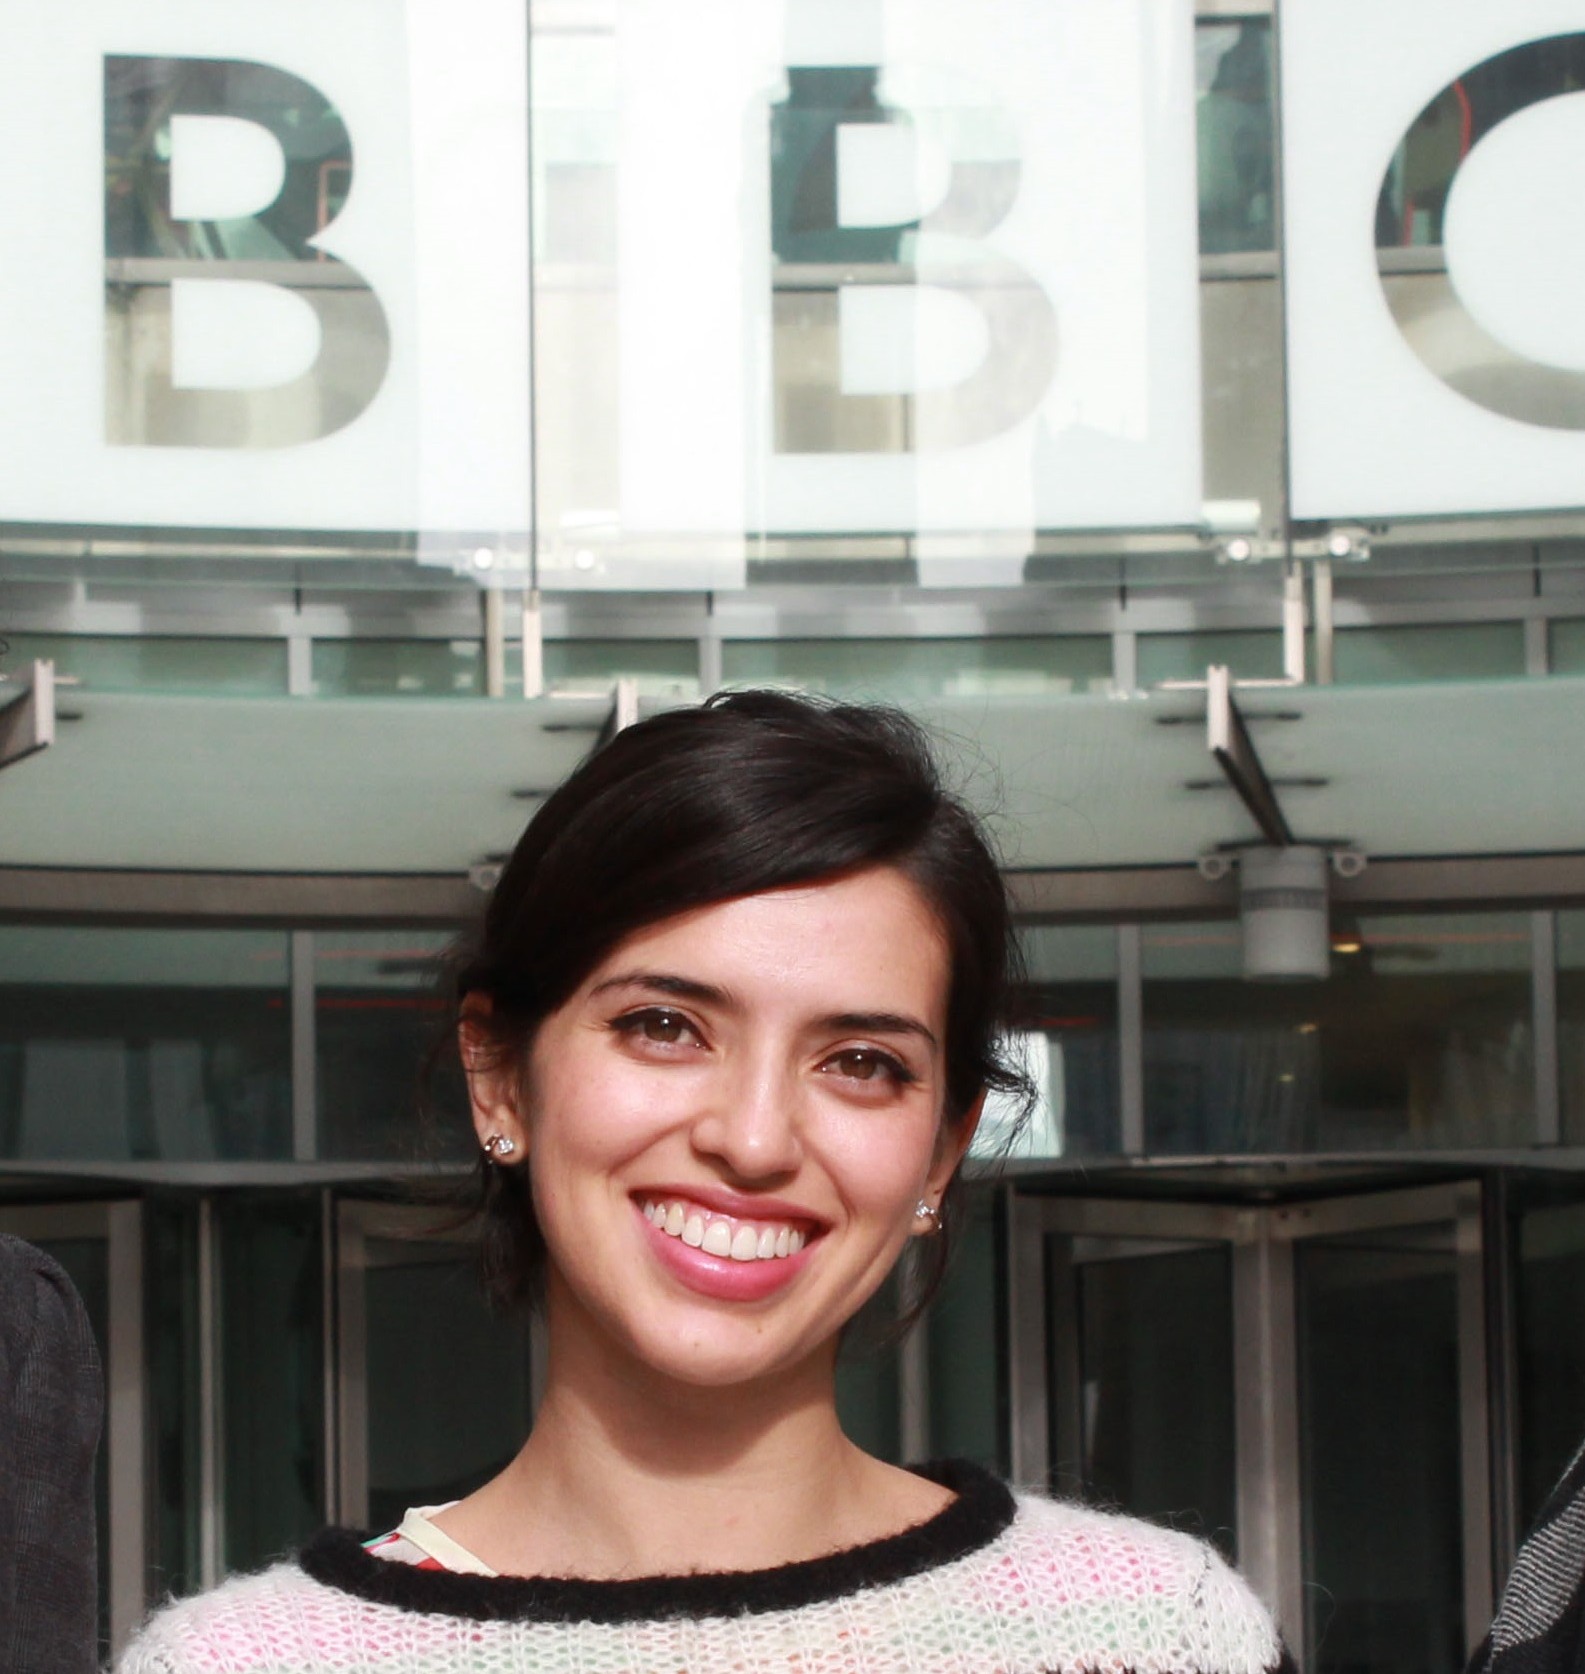 Ana outside the BBC